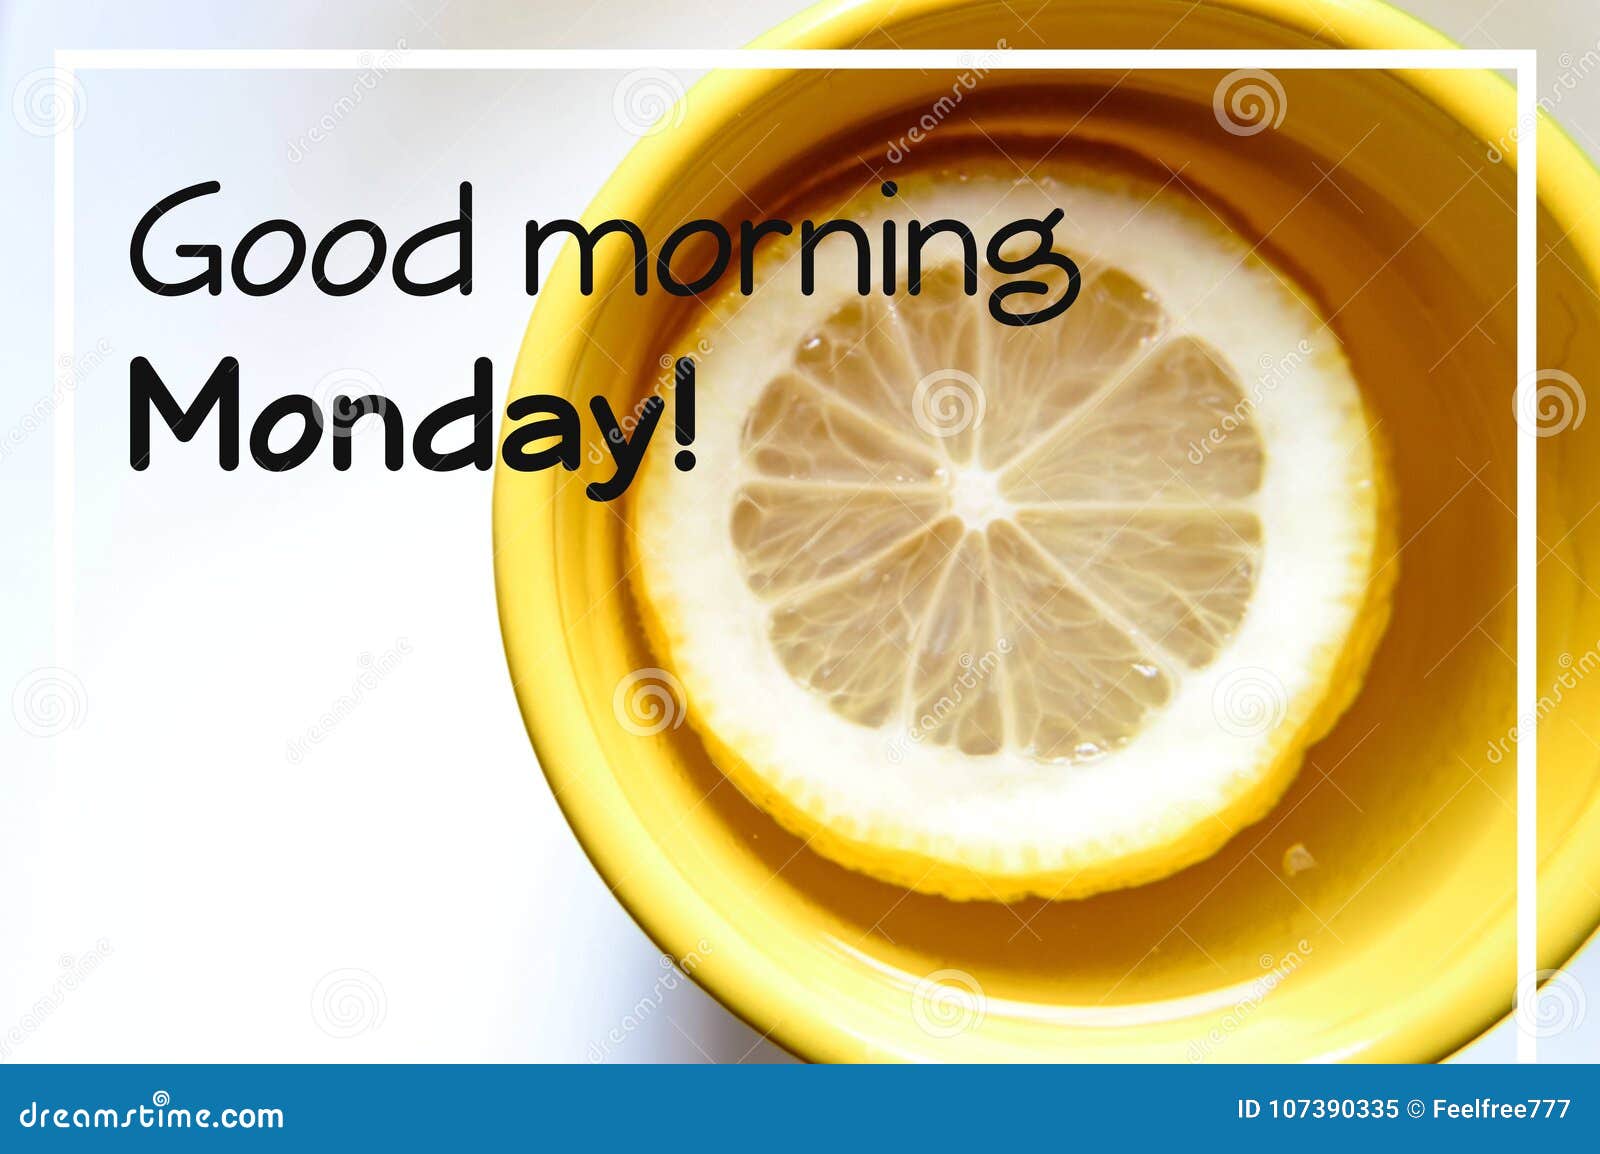 Good Morning Monday Motivation Quote Stock Image - Image of life ...